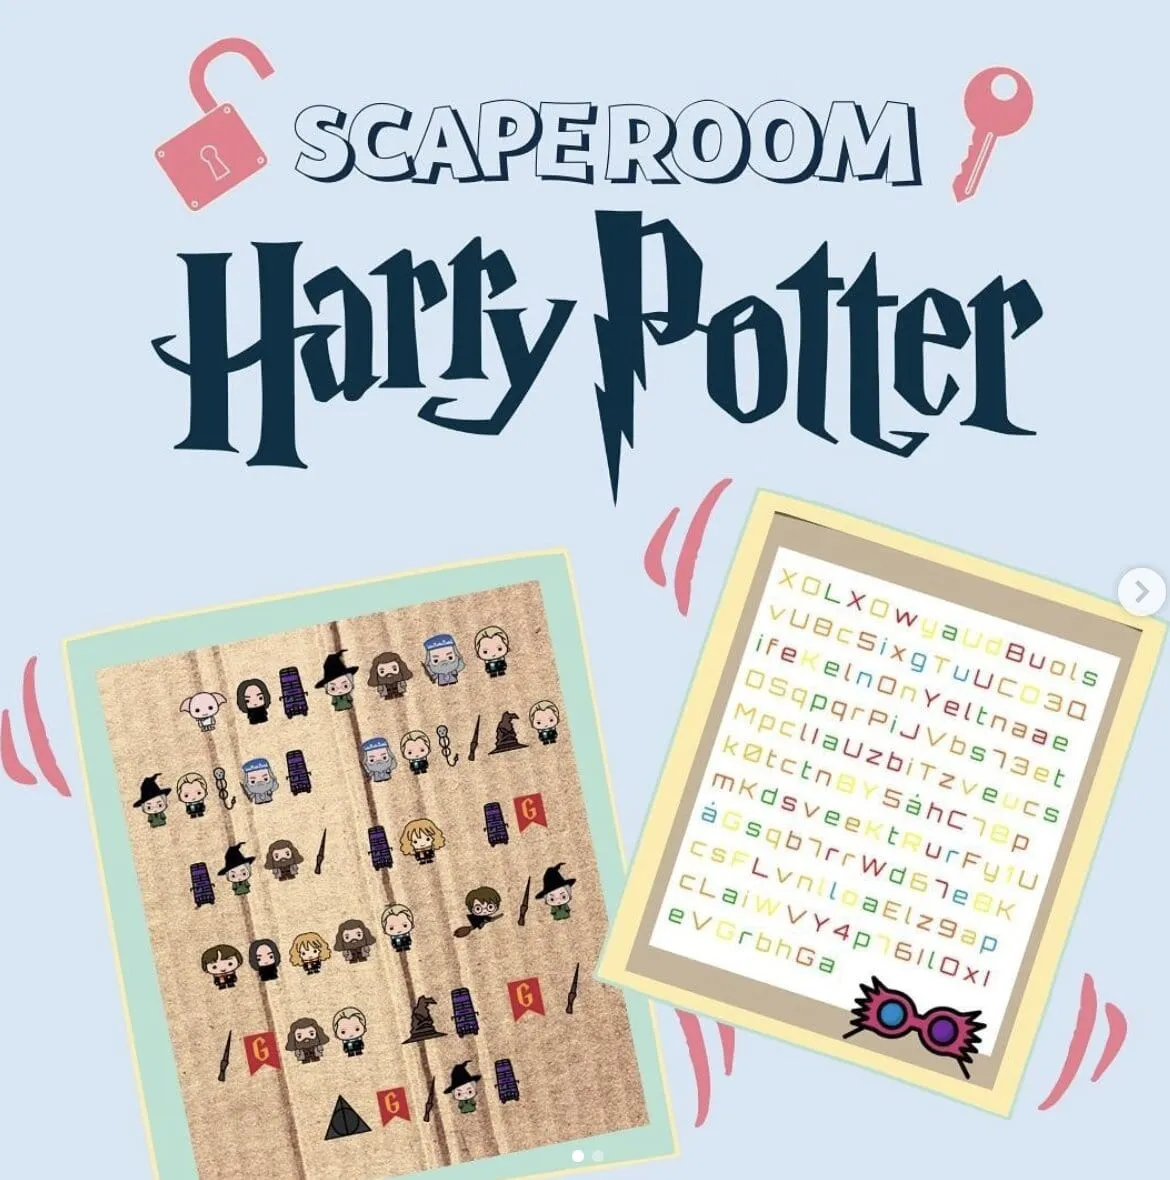 Escape Room Harry Potter